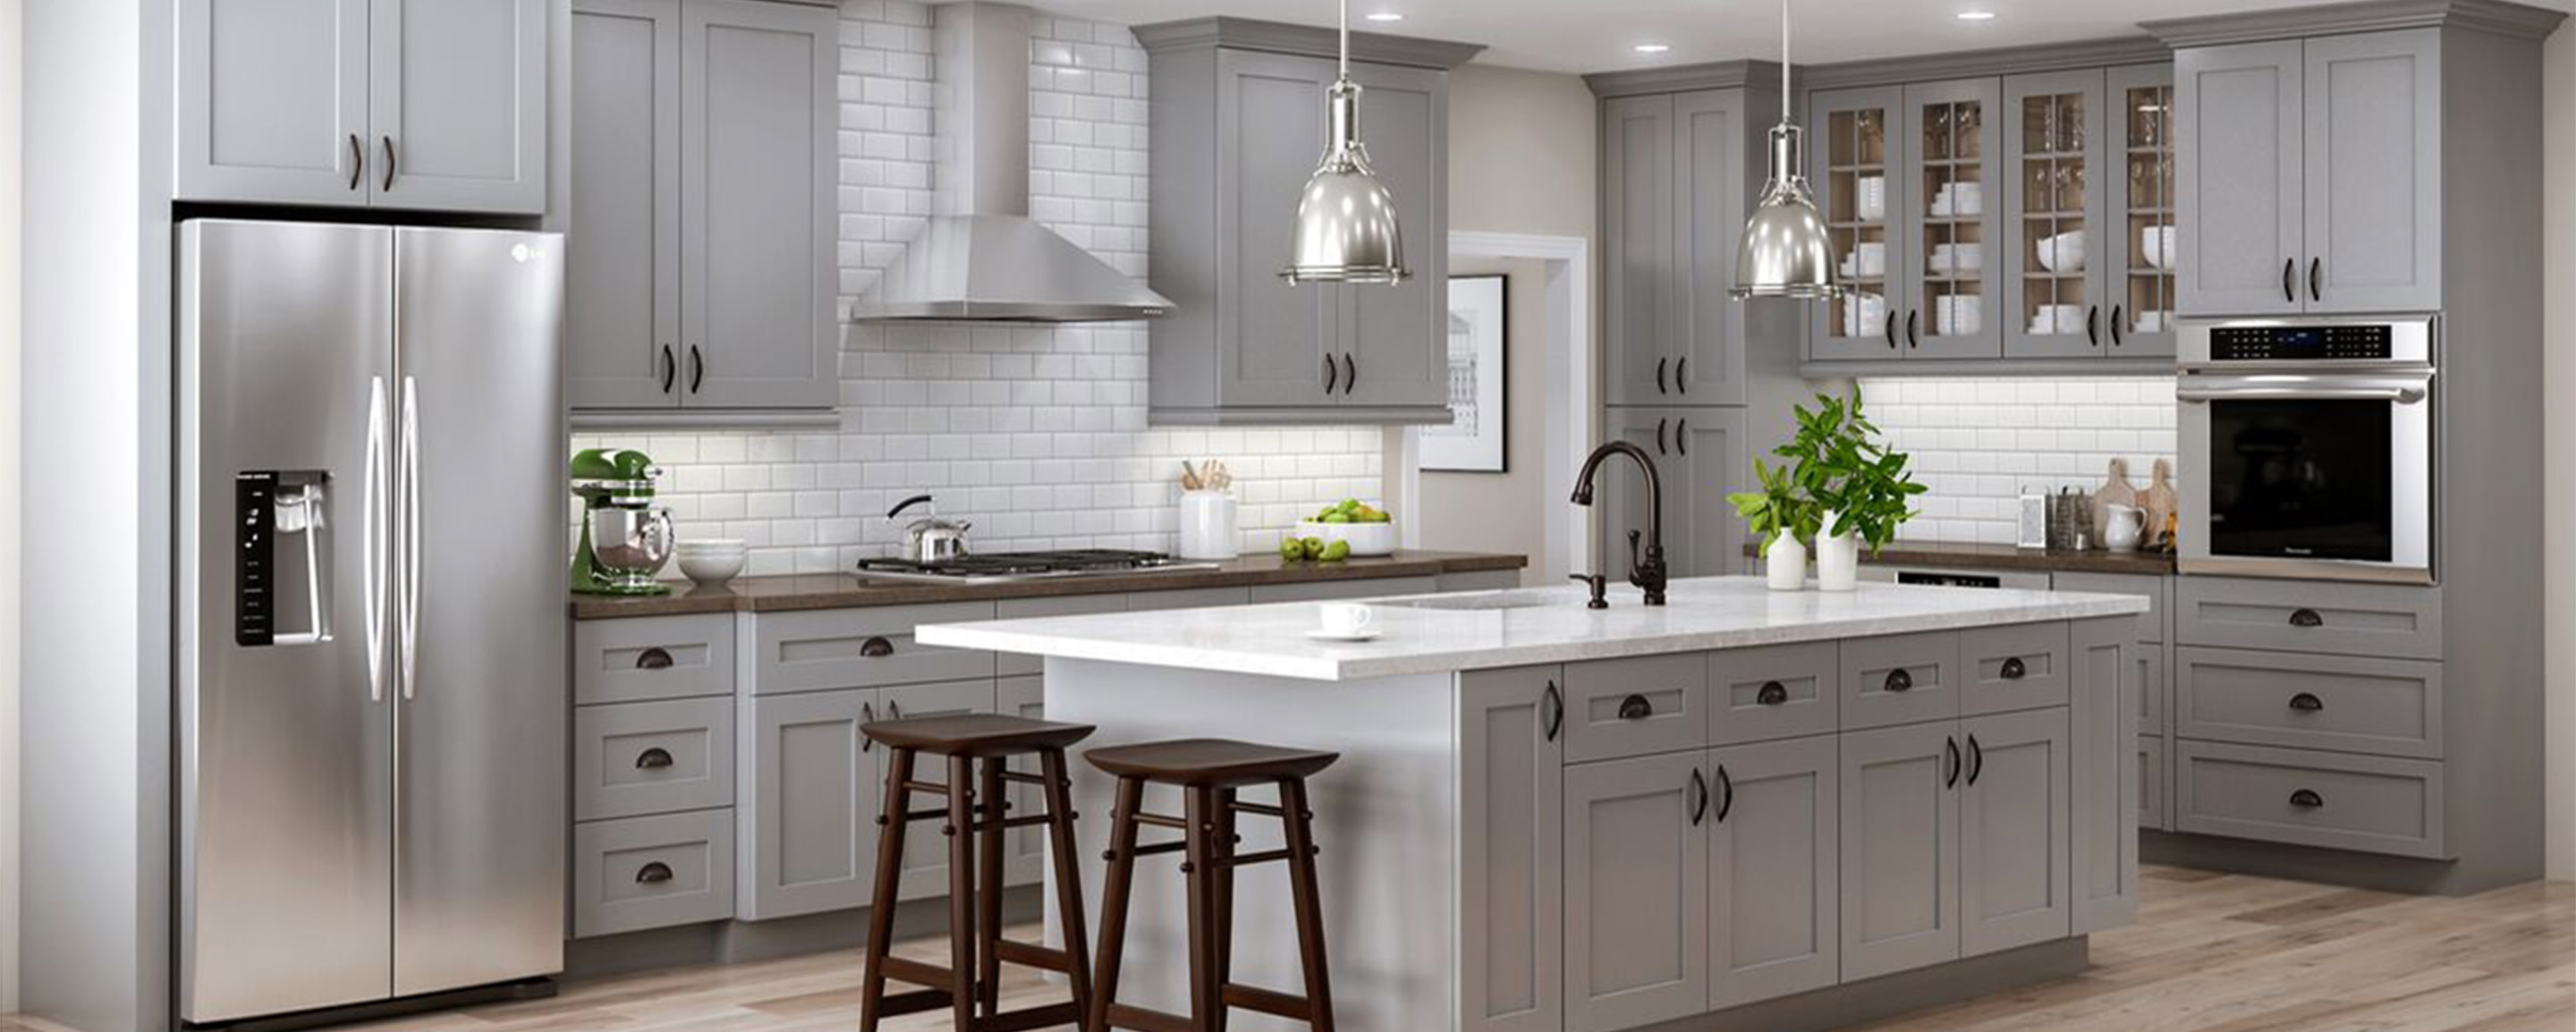 Get Kitchen Design Services Images - kitchen design ideas simple